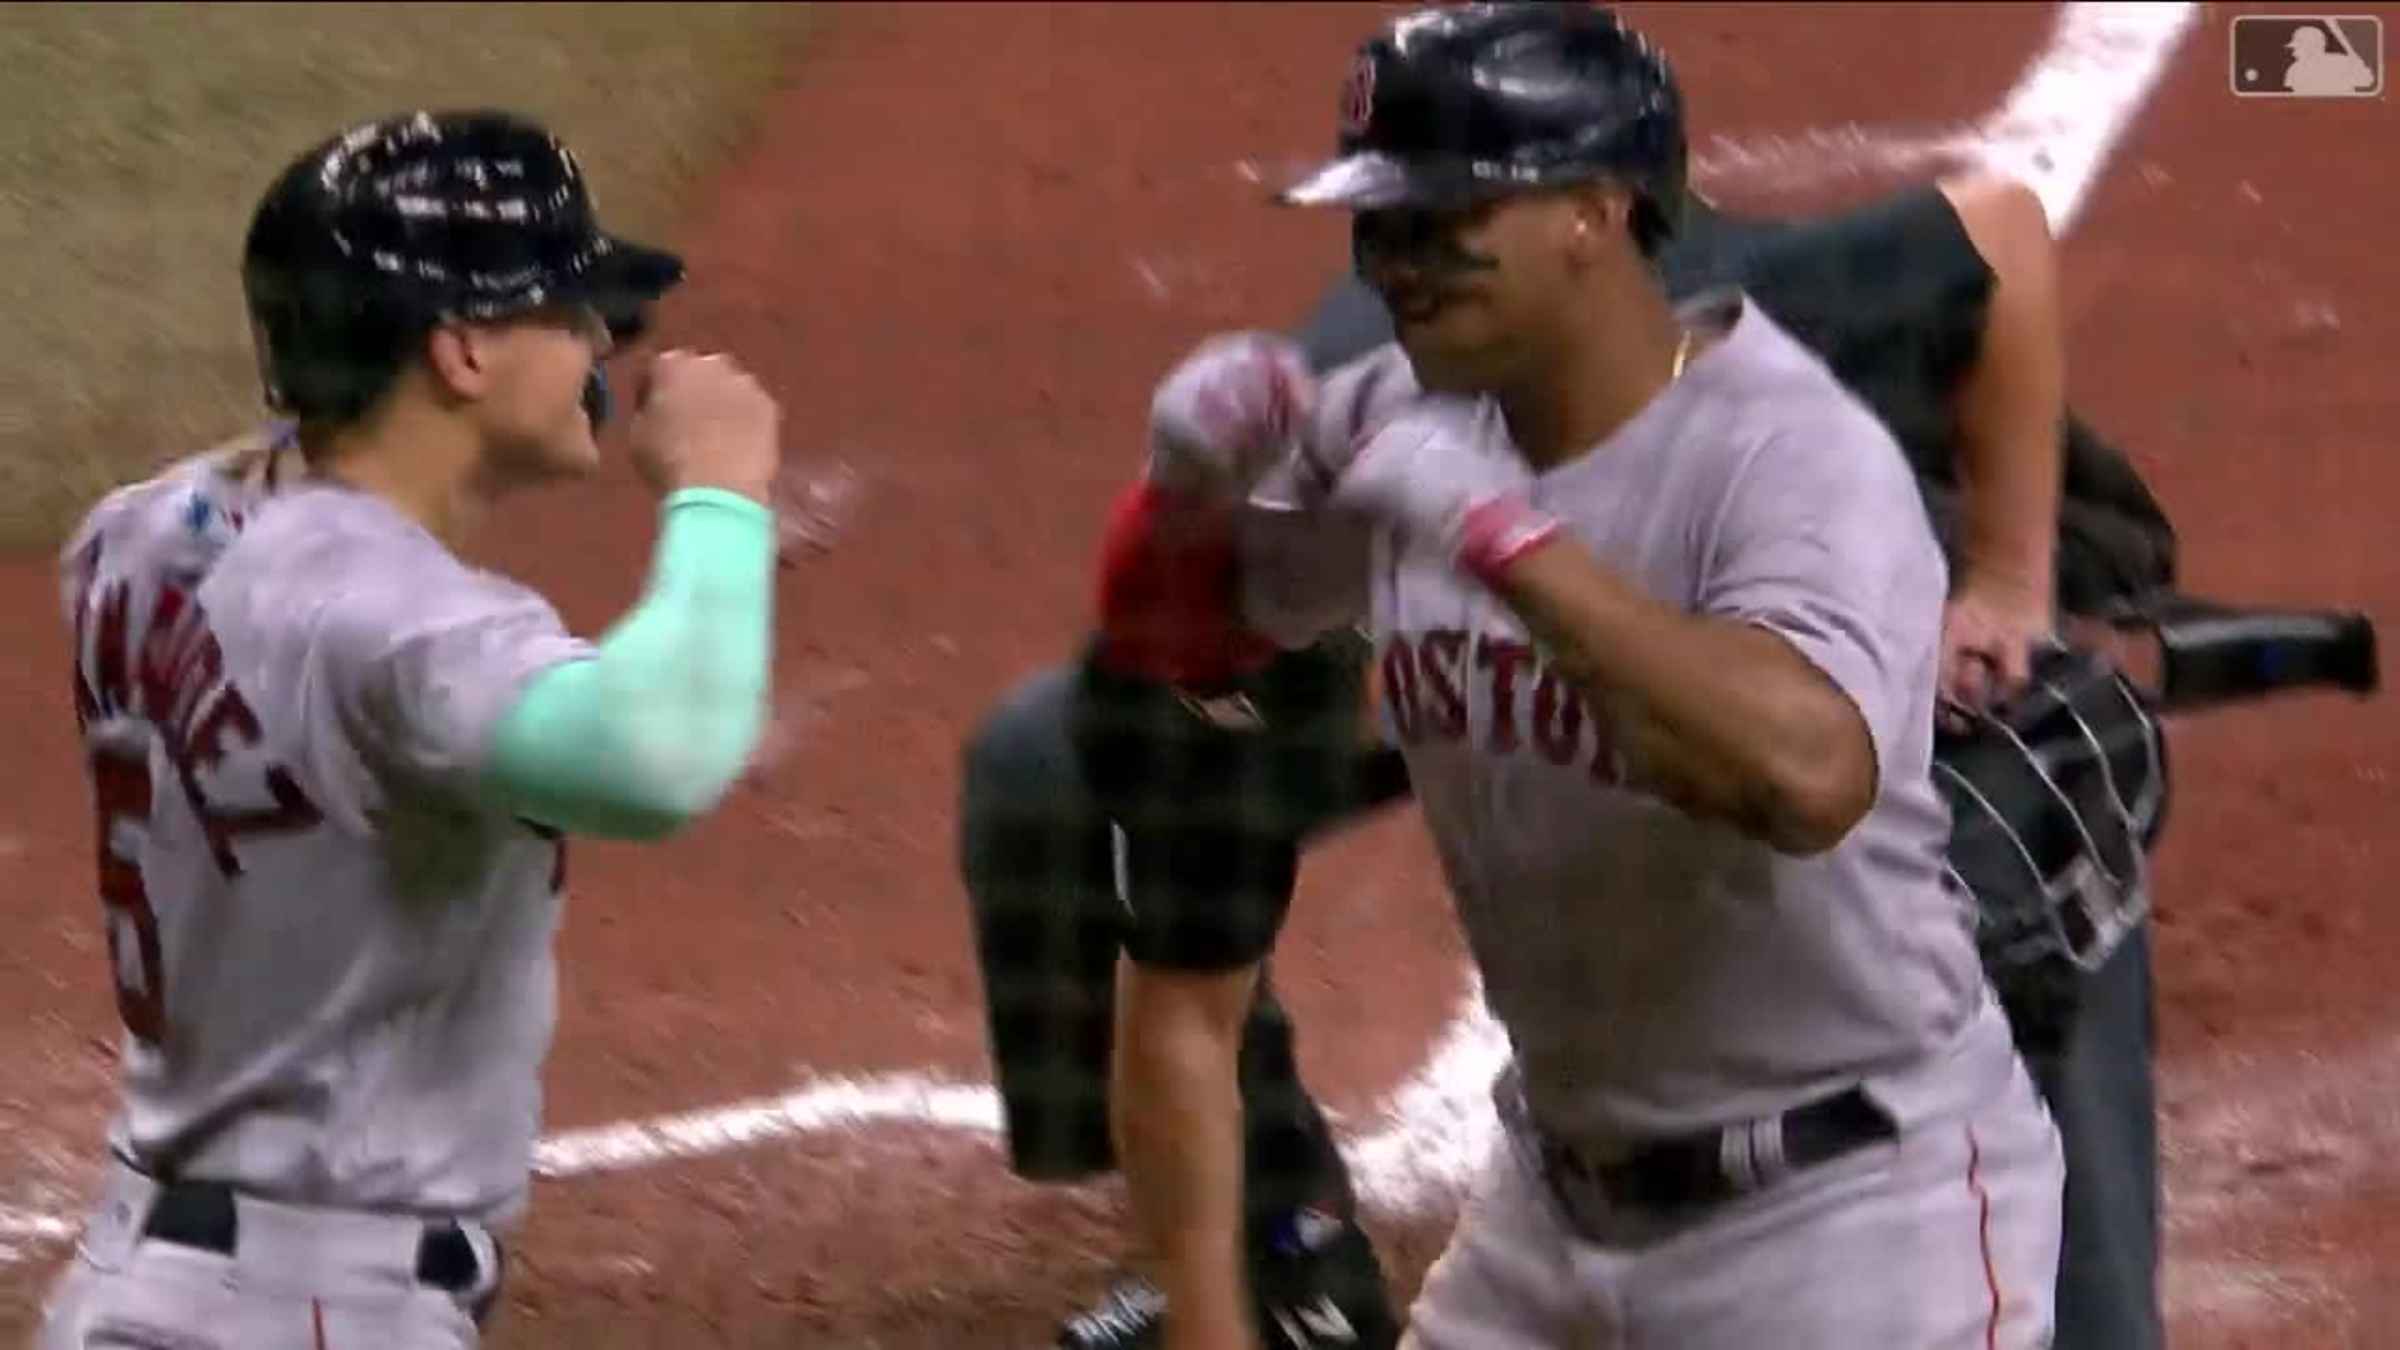 MLB HR Videos on X: Rafael Devers - Boston Red Sox (10)